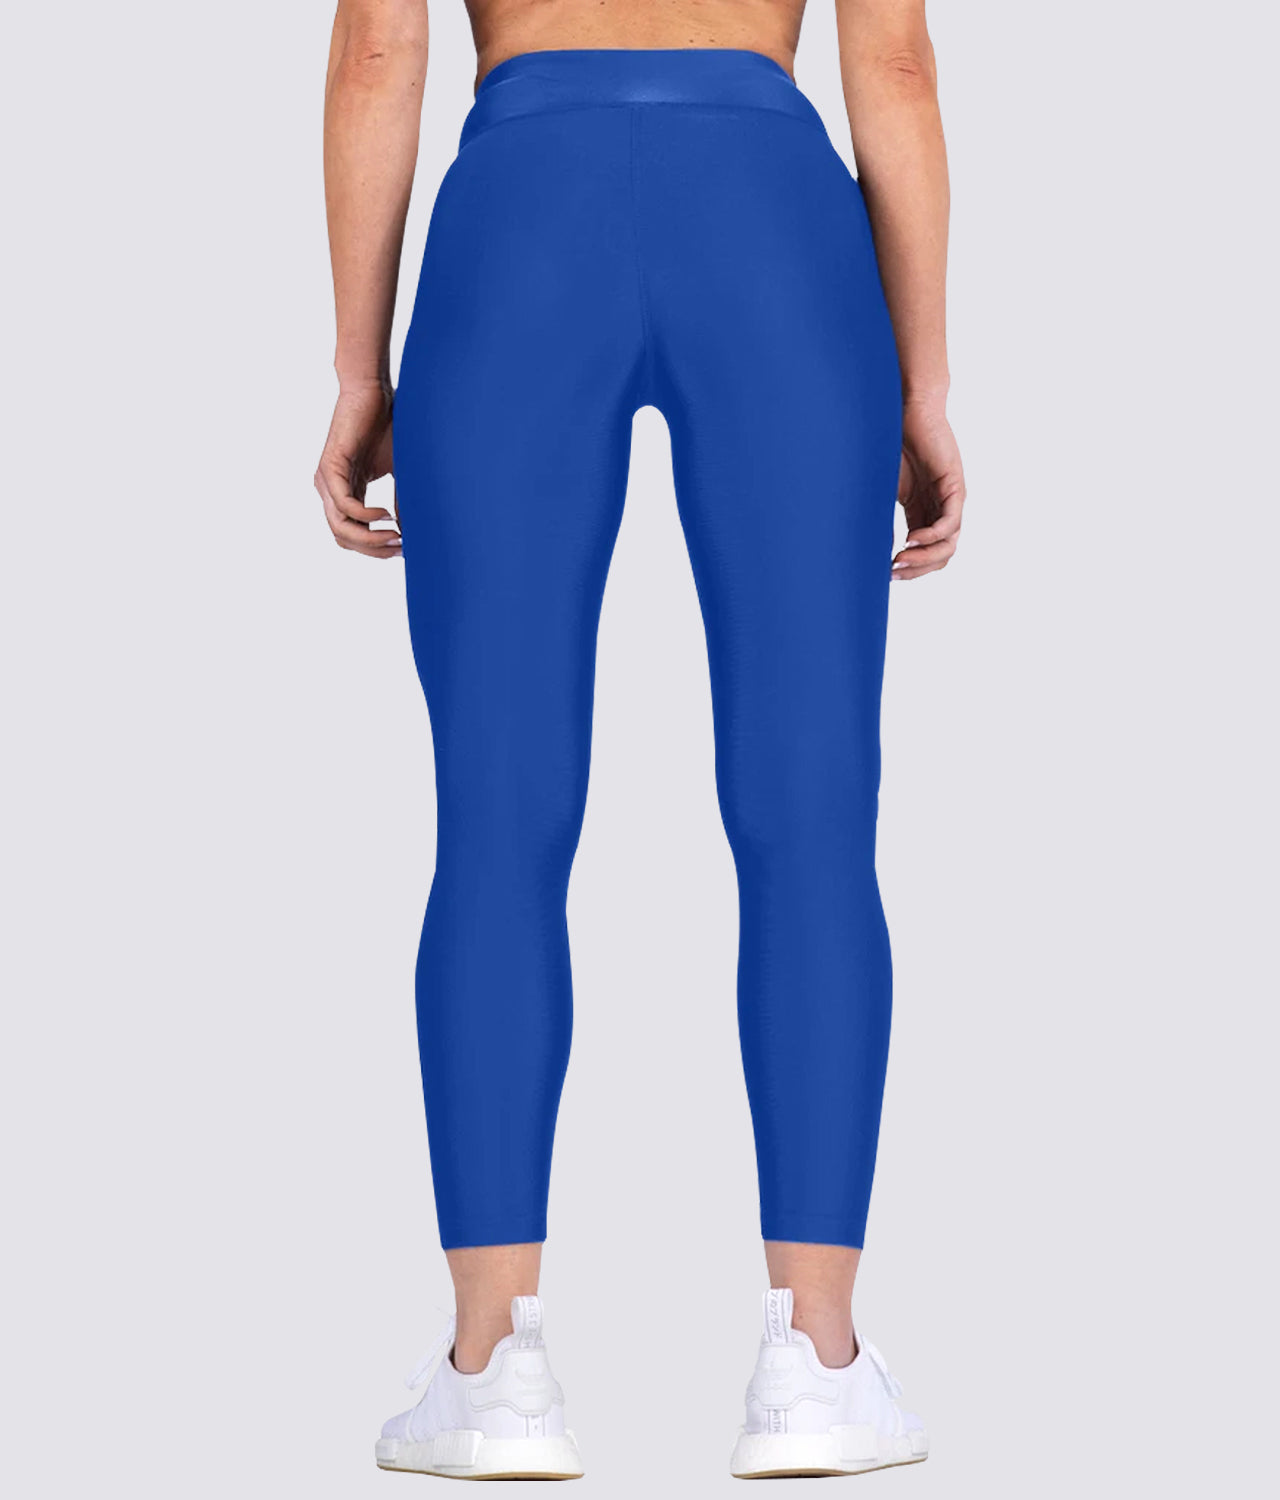 Elite Sports Comfortable & Secure Blue Women Compression Boxing Spat Pants